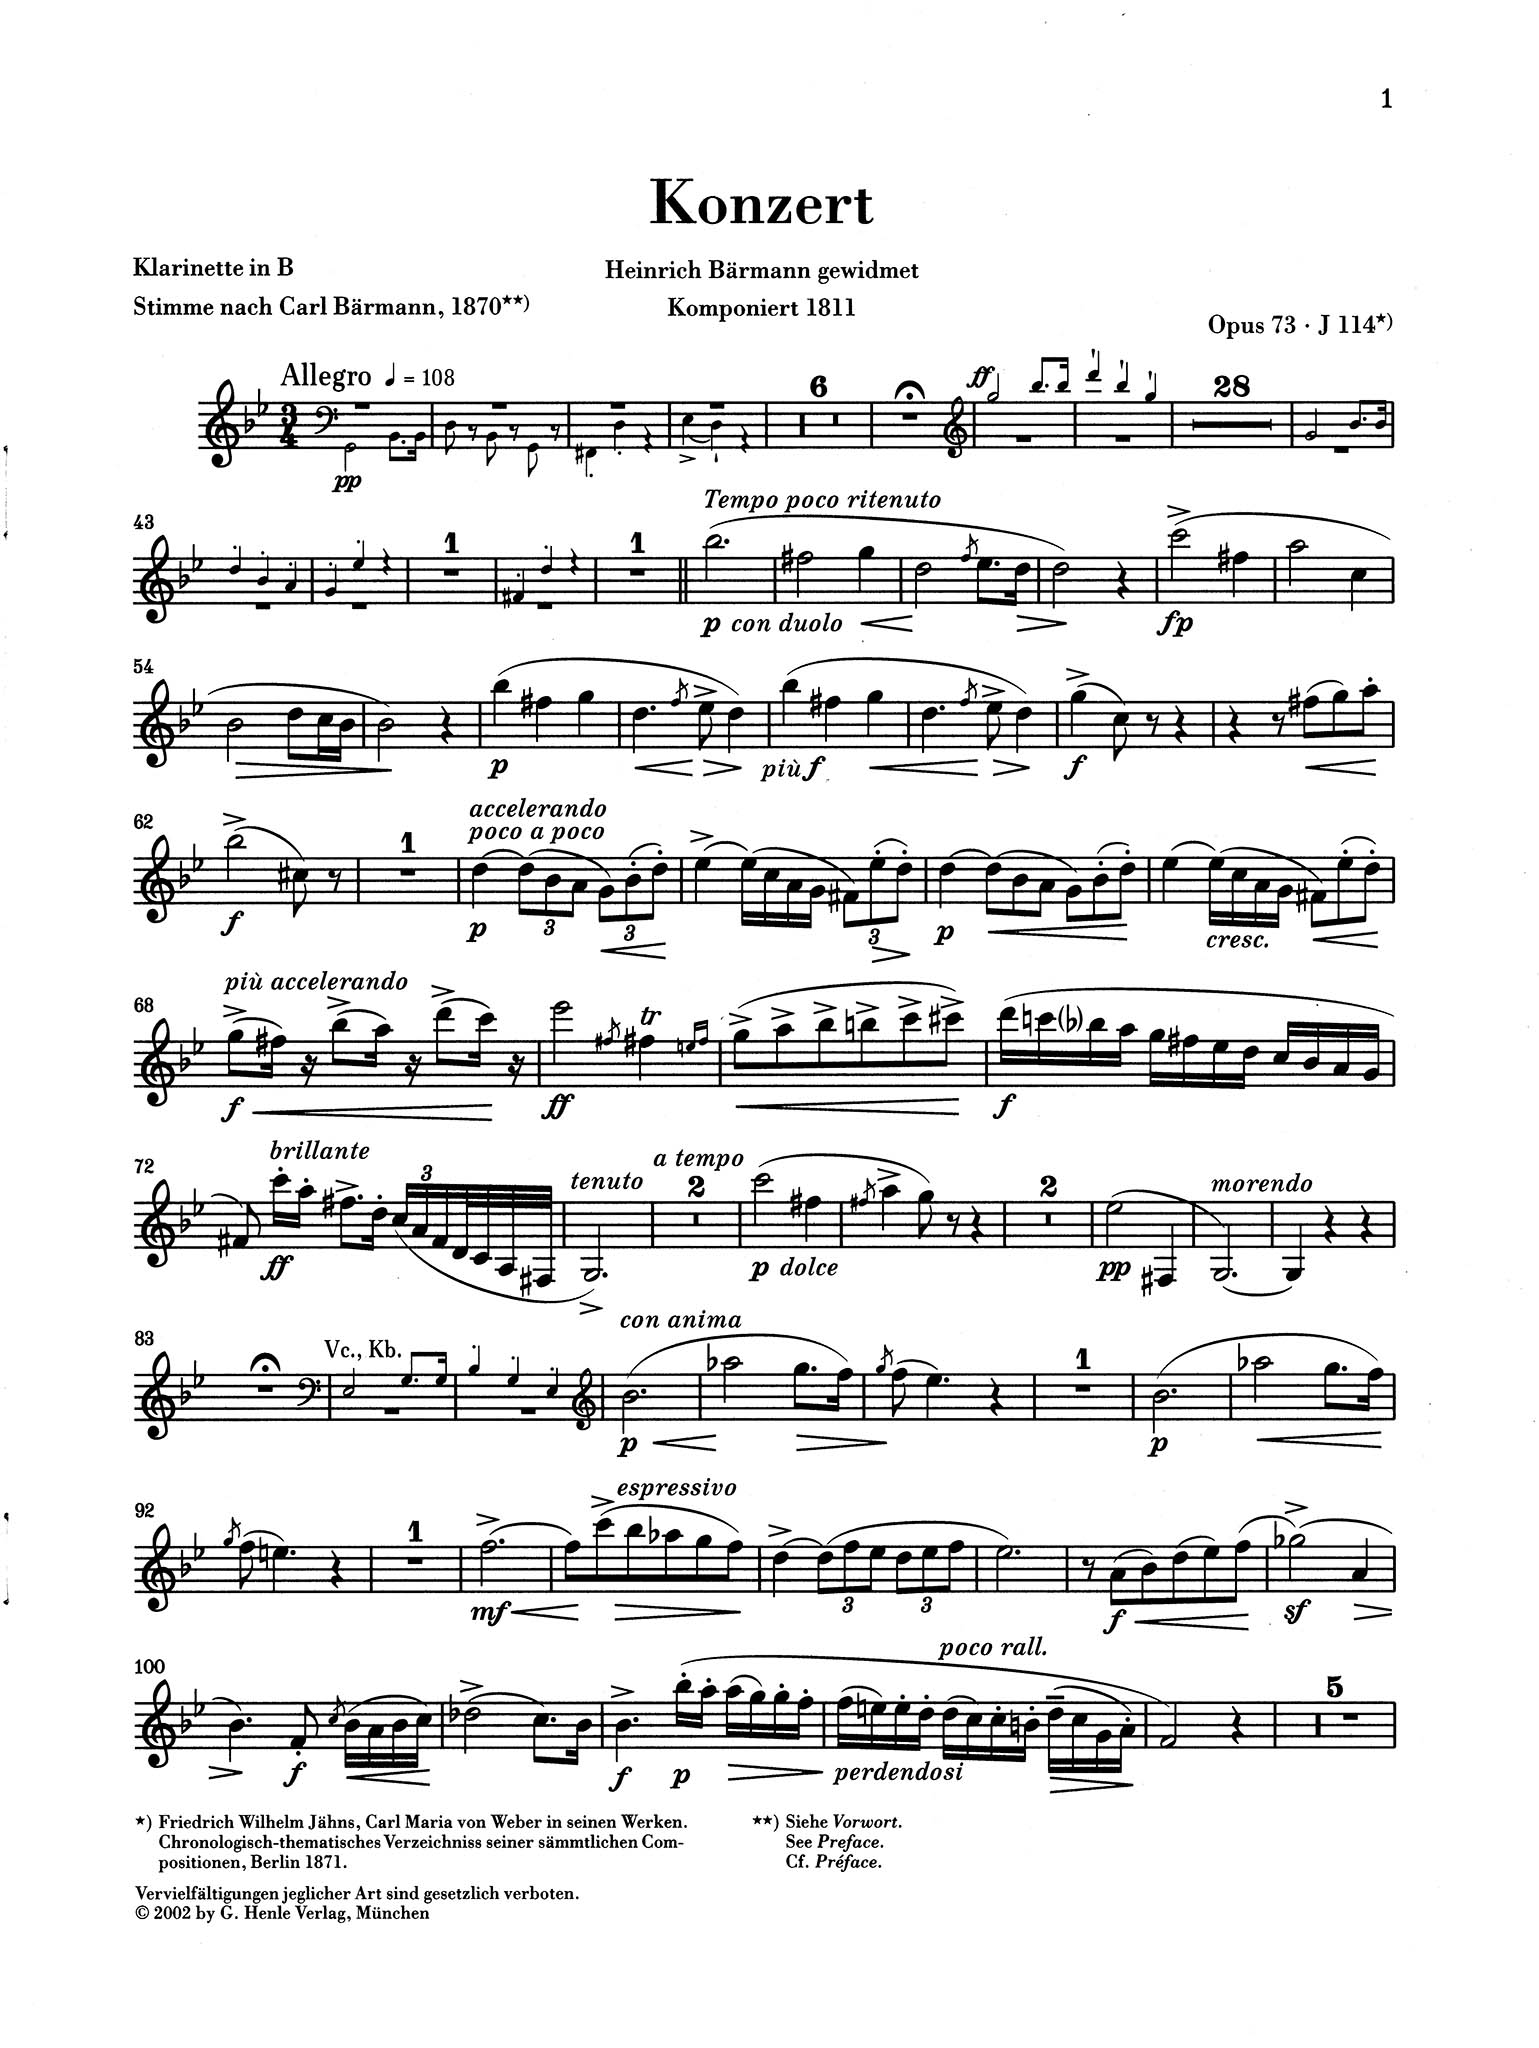 Clarinet Concerto No. 1 in F Minor, Op. 73 Baermann Clarinet part